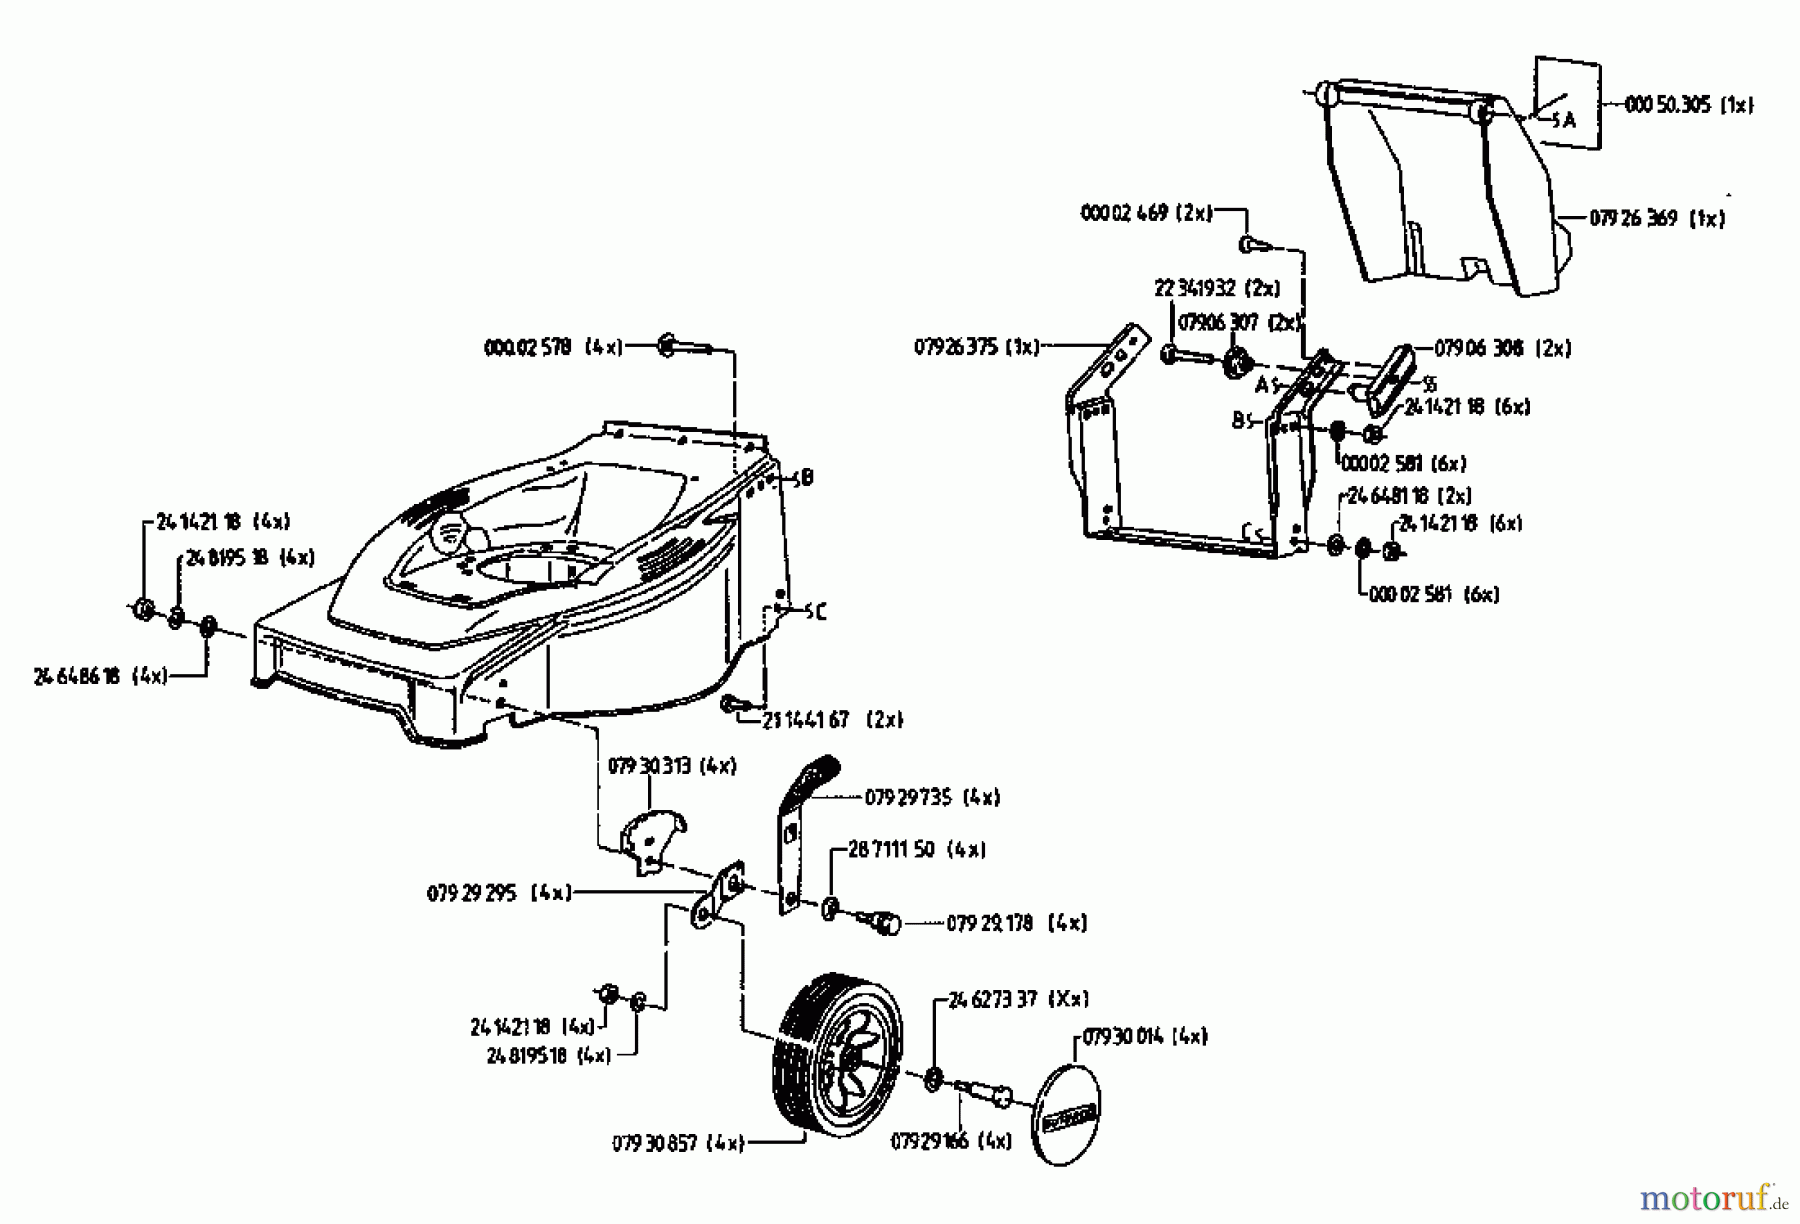  Gutbrod Electric mower HE 48 02817.02  (1994) Basic machine